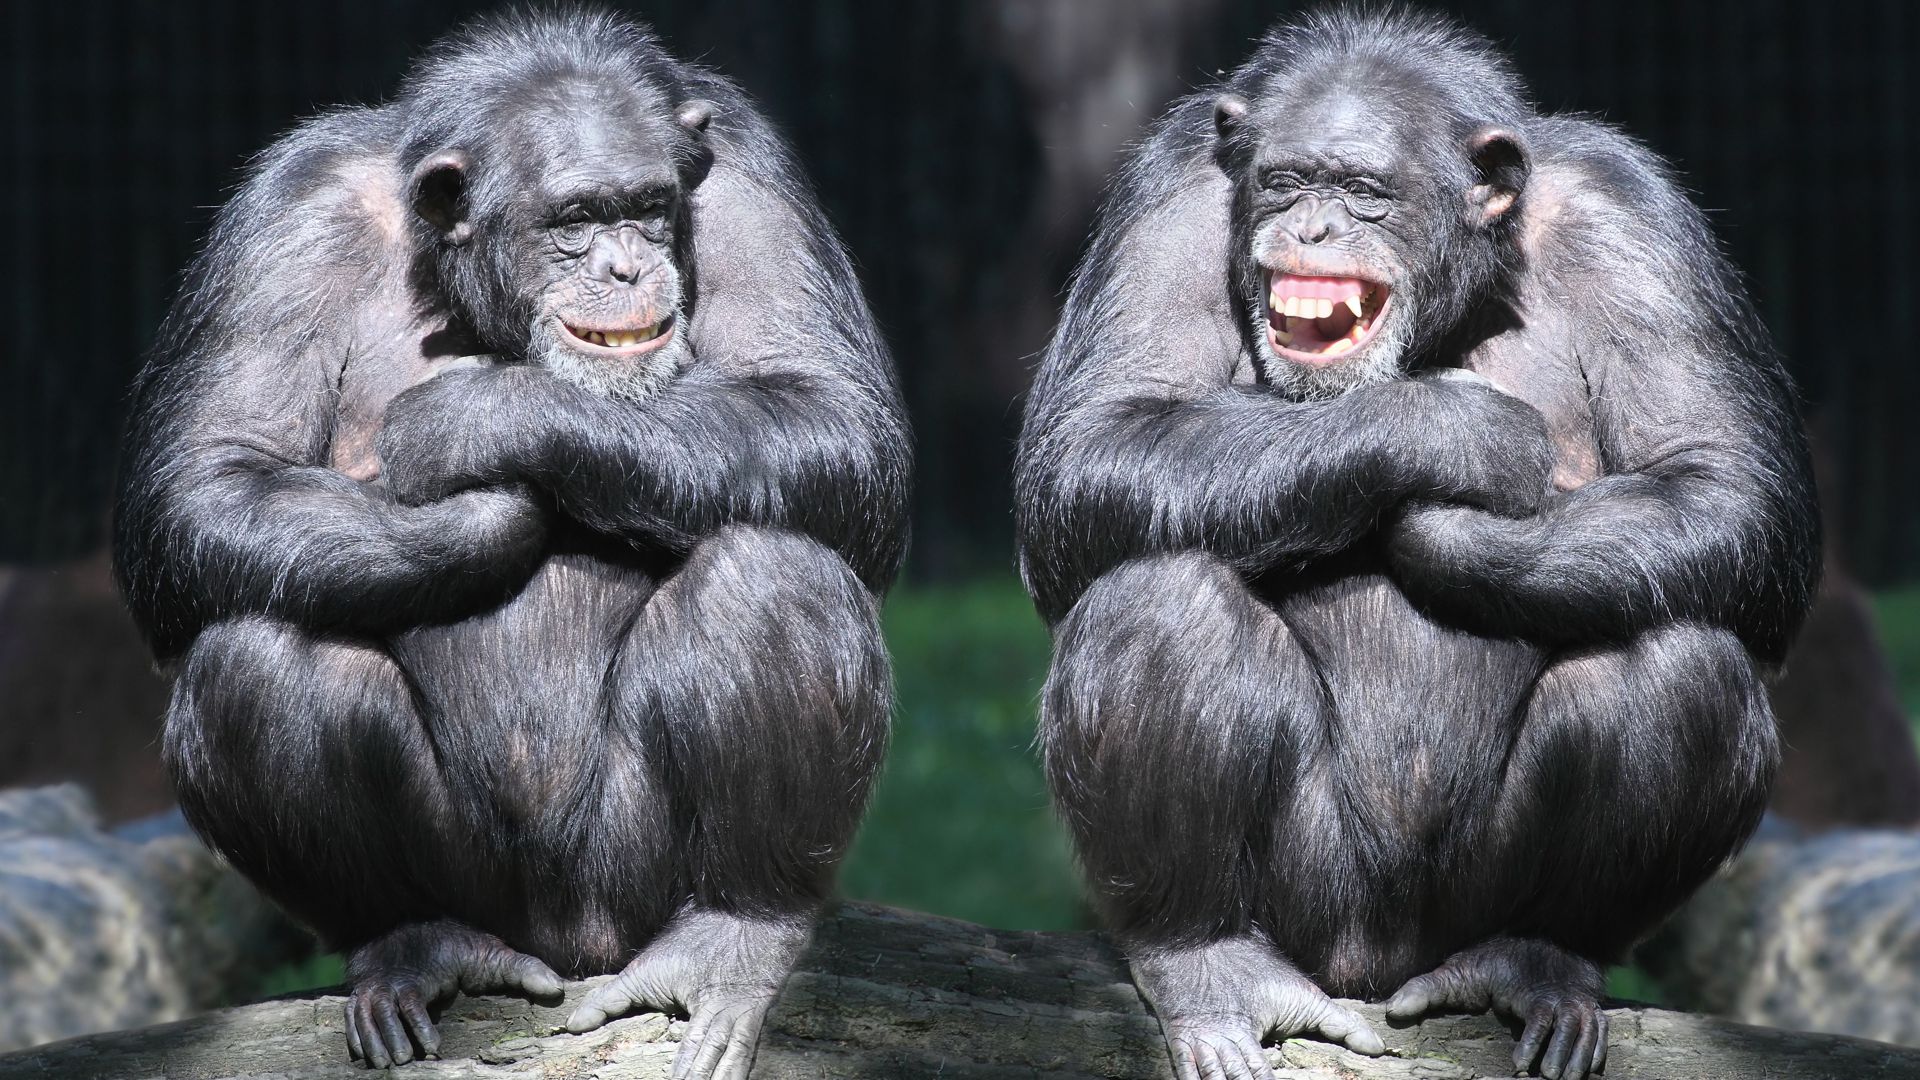 chimpanzee, couple, cute animals, monkey, funny (horizontal)